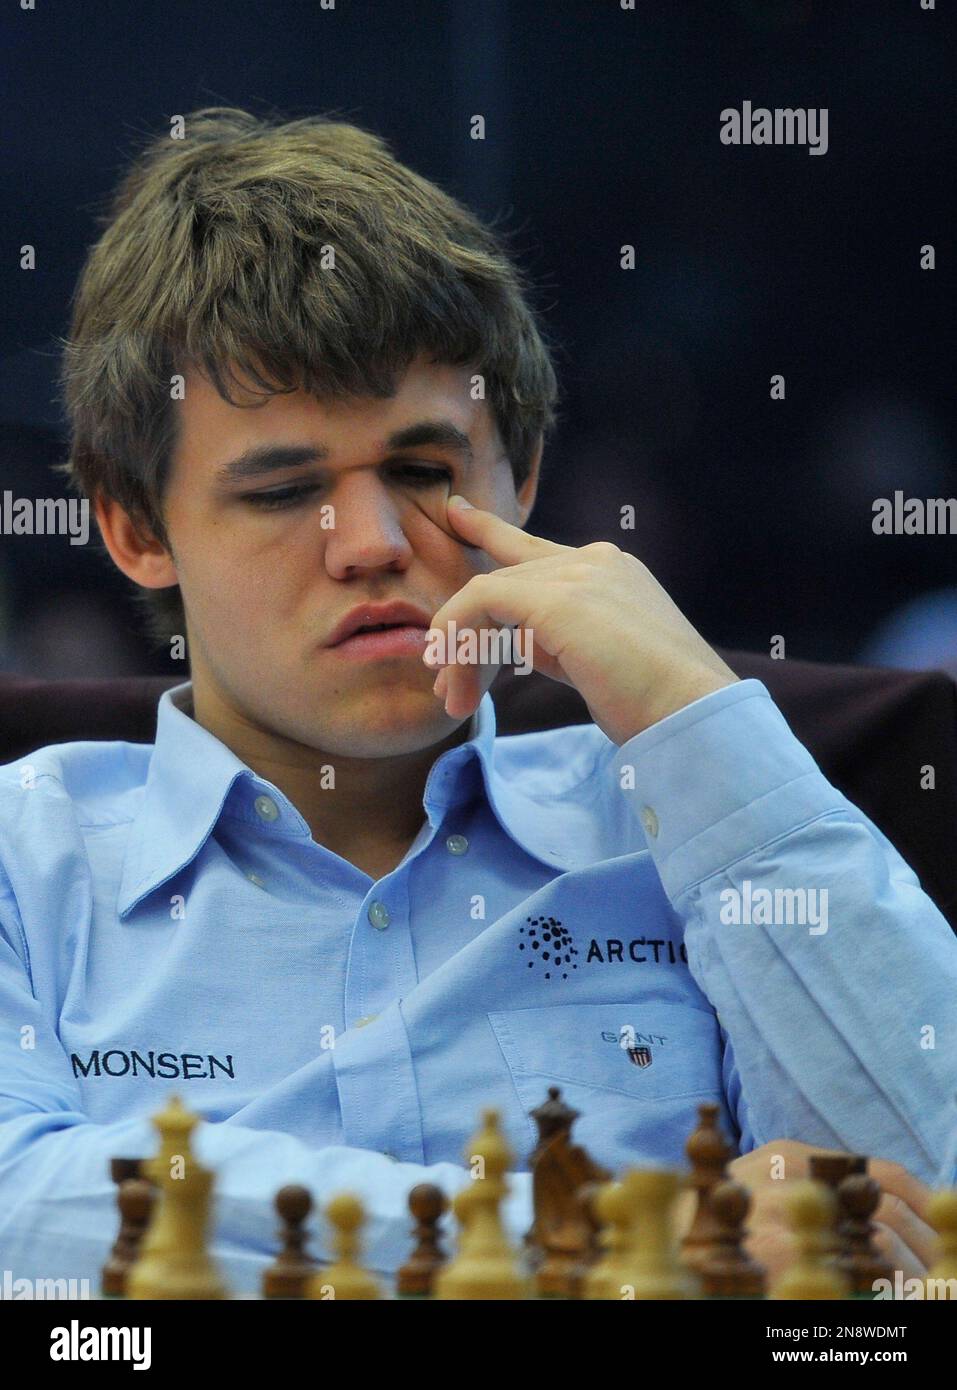 File:Match Carlsen-Caruana.jpg - Wikimedia Commons